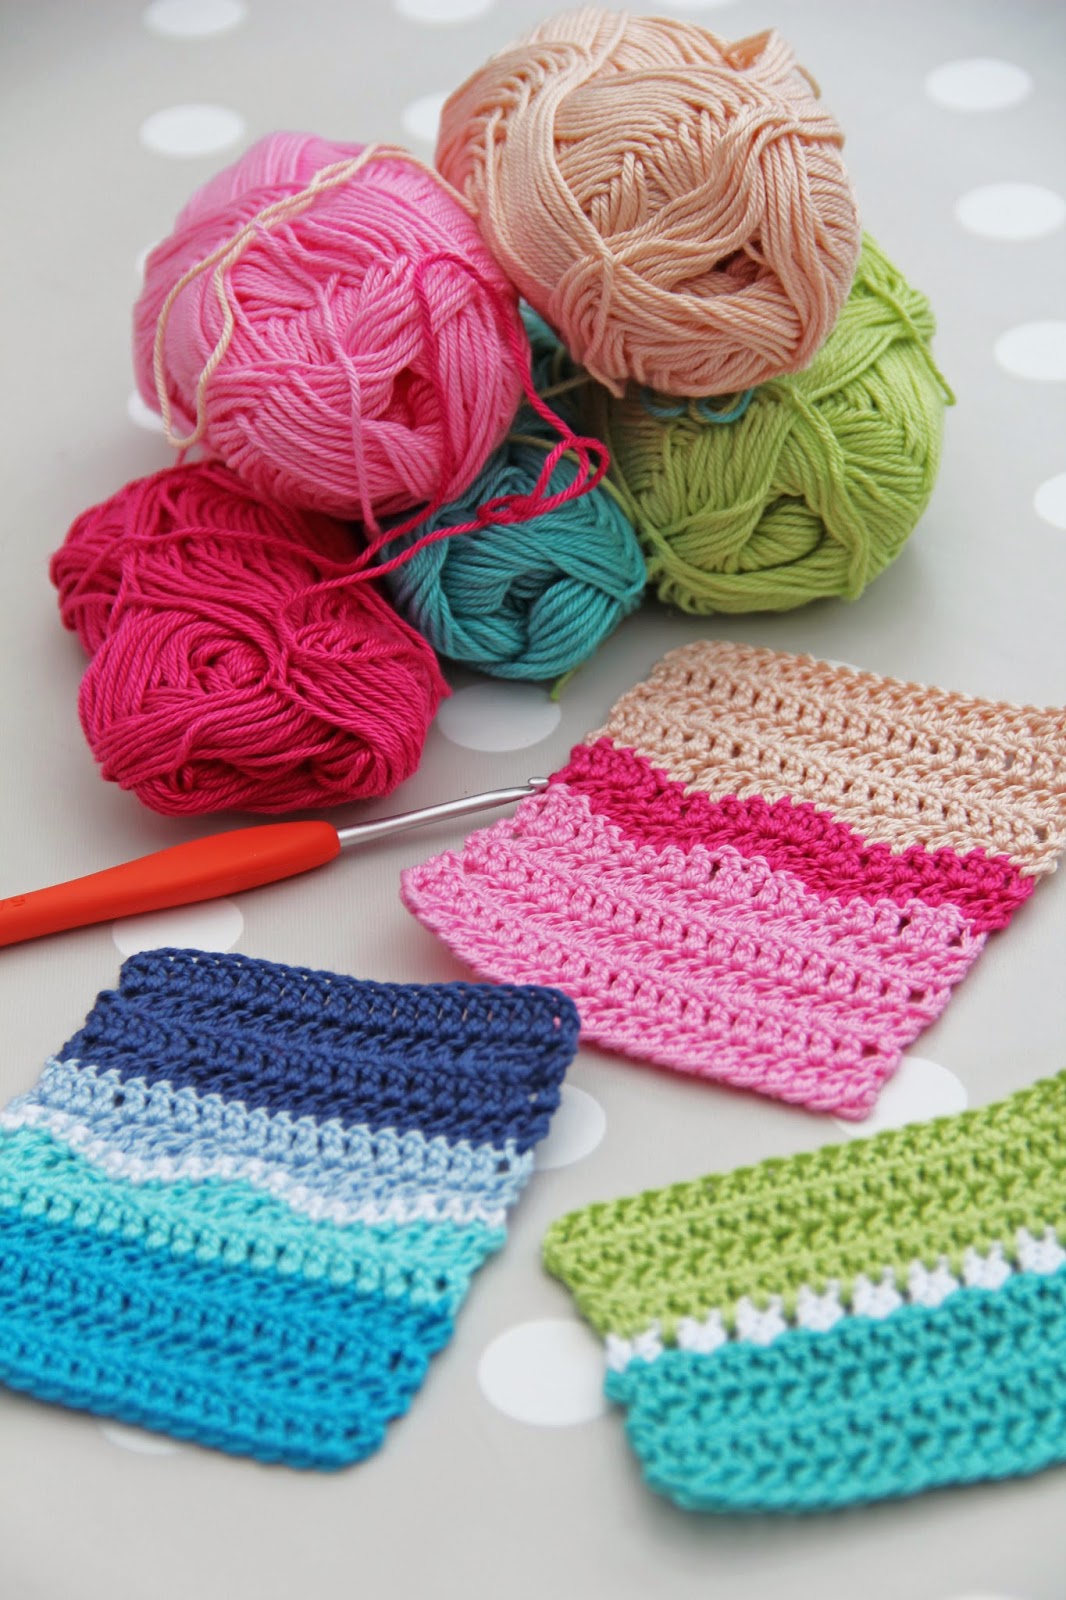 CreJJtion: New Crochet Pattern